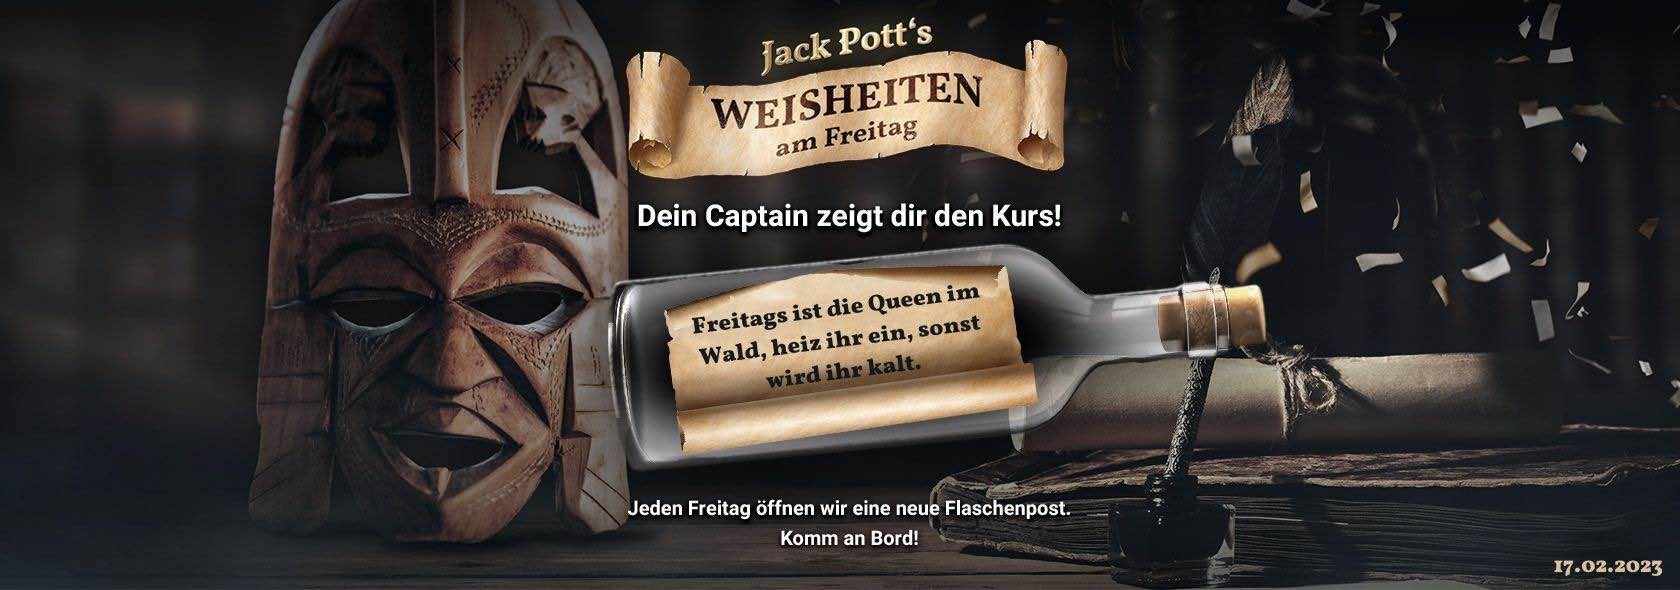 jack-potts-weisheiten-am-freitag-karneval-17022023-1680x600